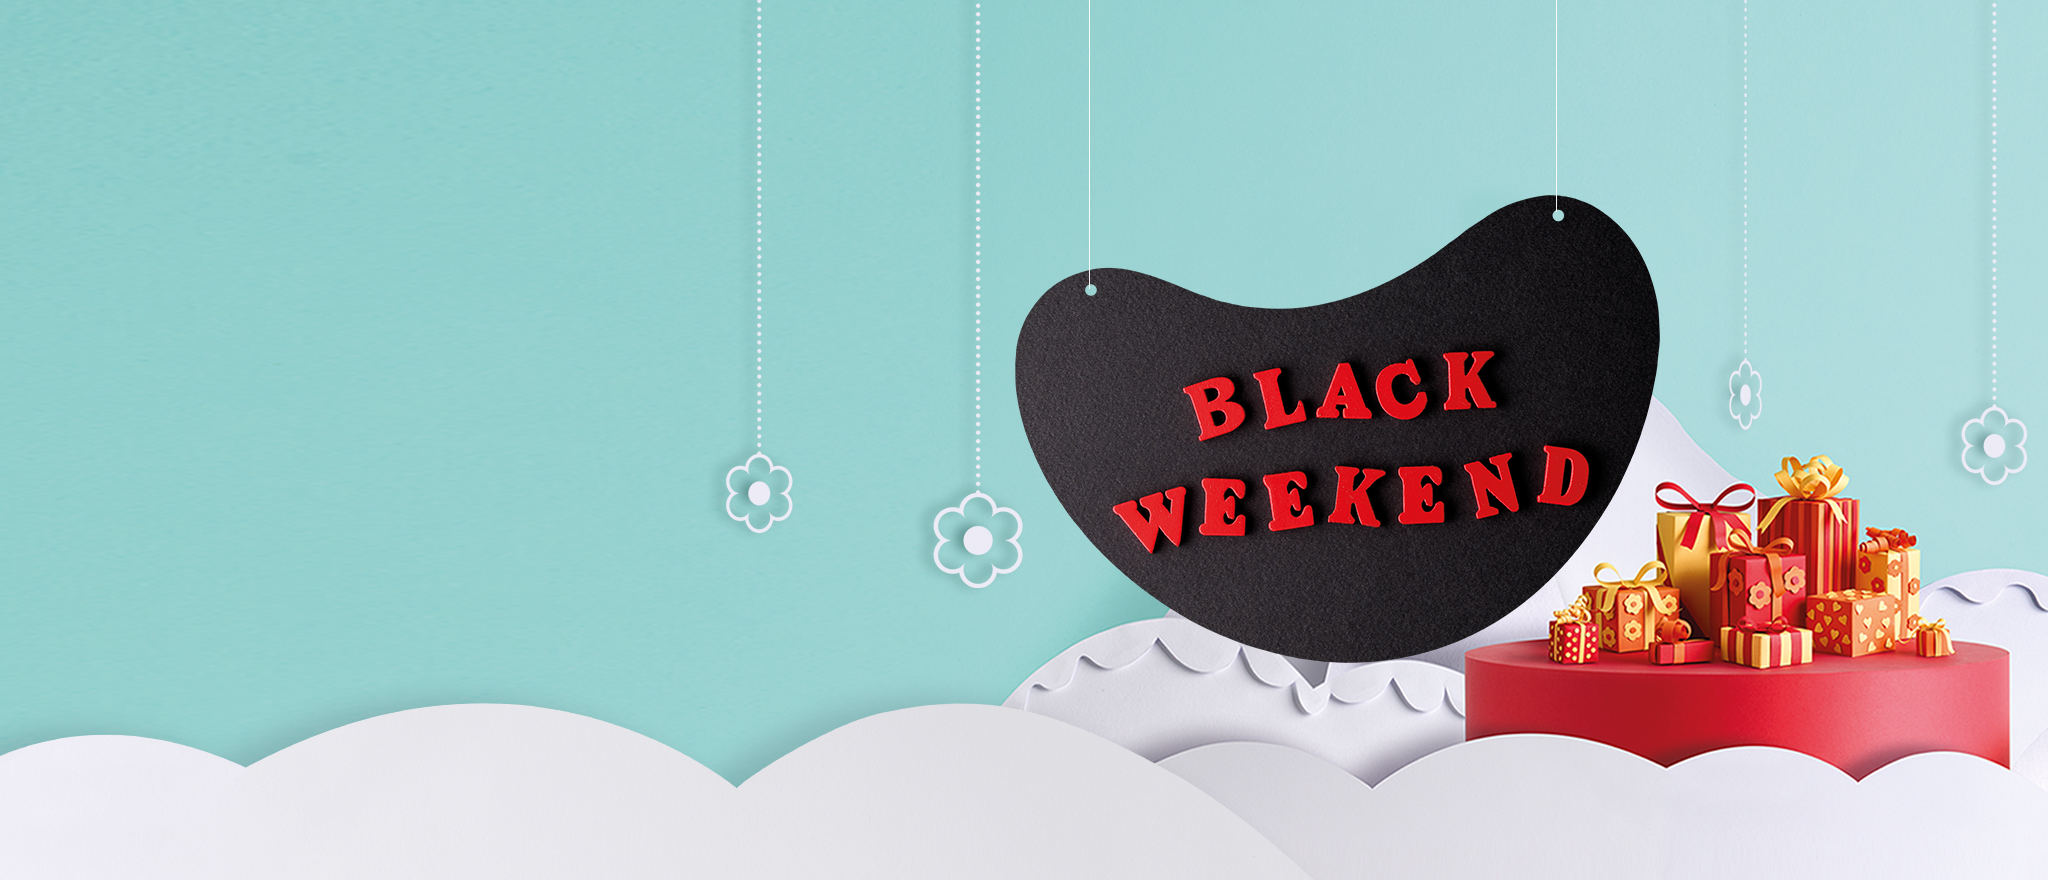 Black weekend | Conad